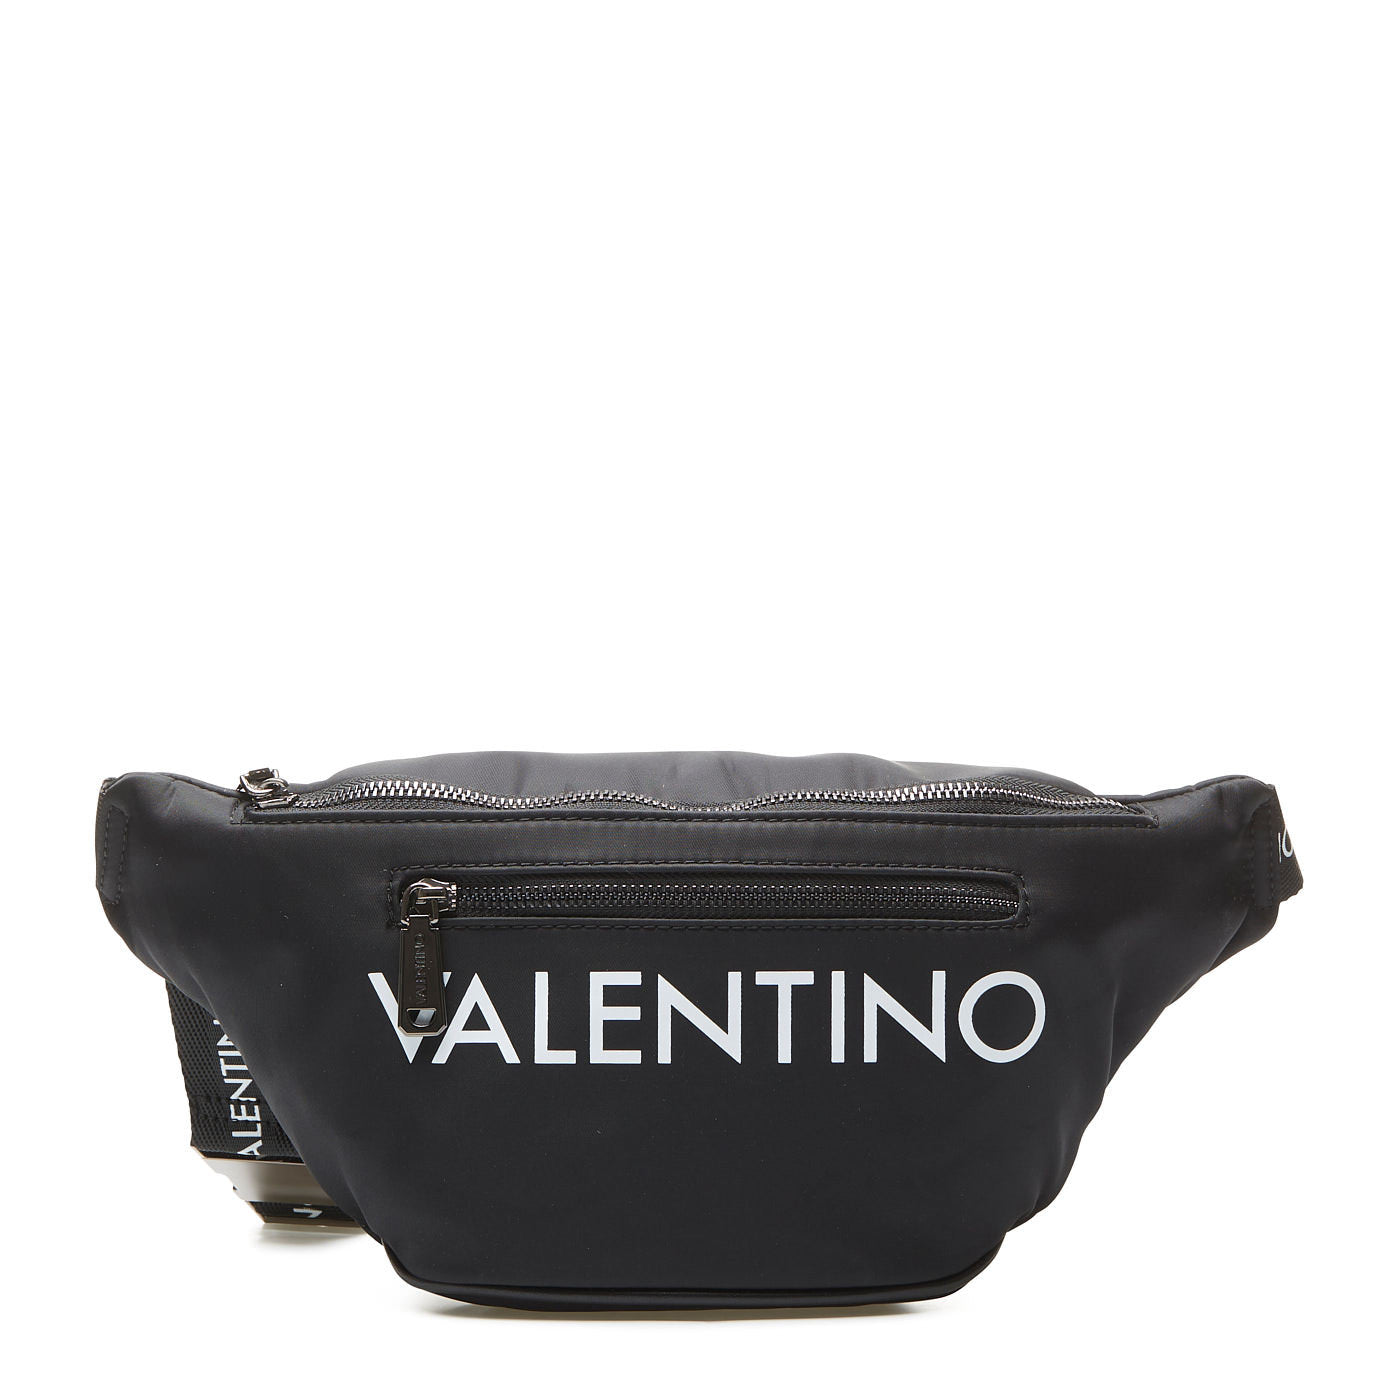 Valentino Kylo Bum Bag in Black | Fashion2B